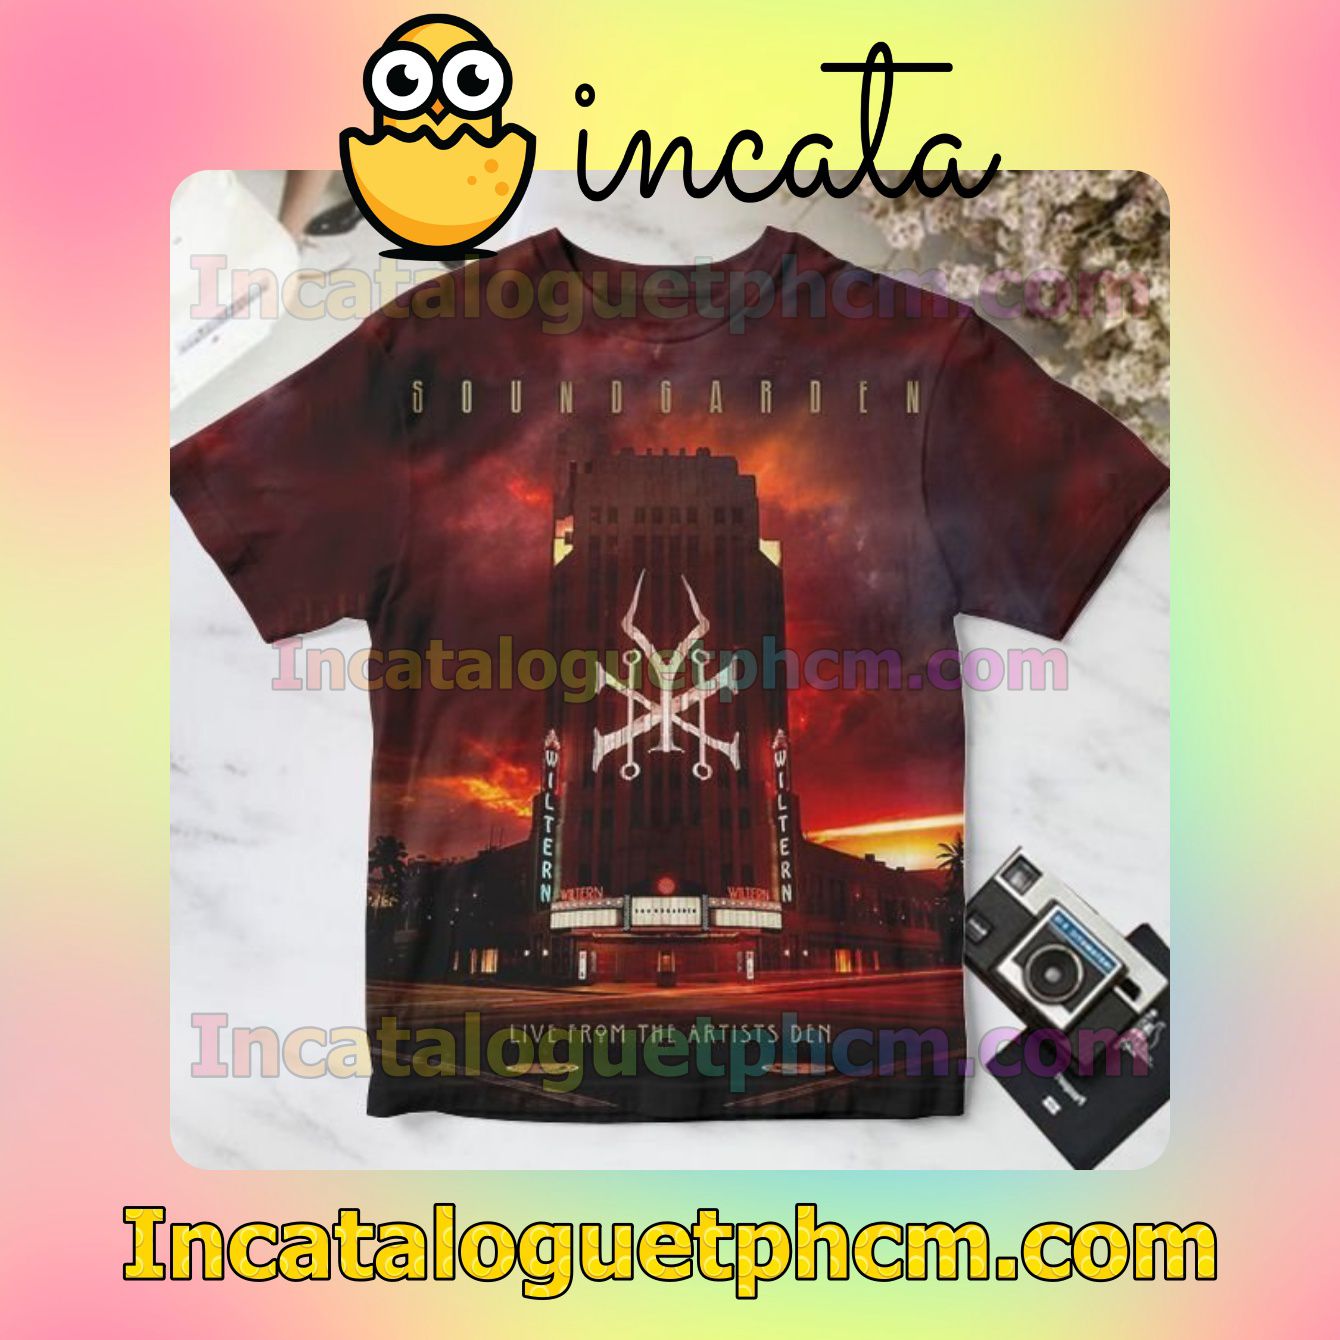 Soundgarden Live From The Artists Den Album Cover For Fan Shirt